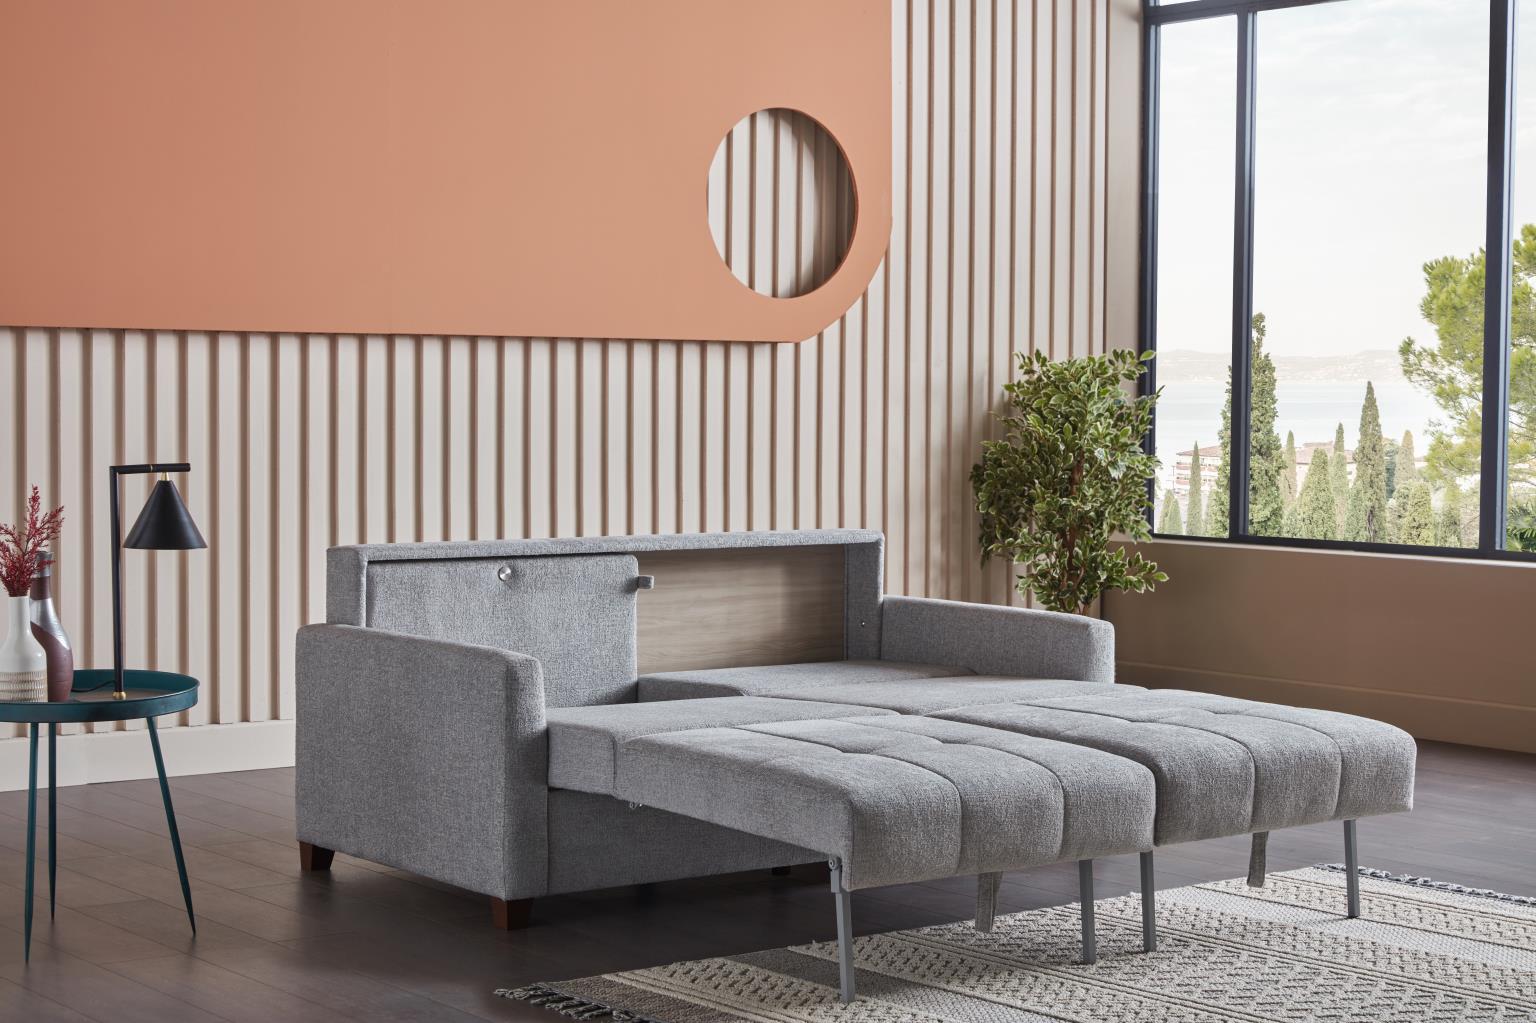 Twinsoft Queen Sleeper Sofa - Home Store Furniture